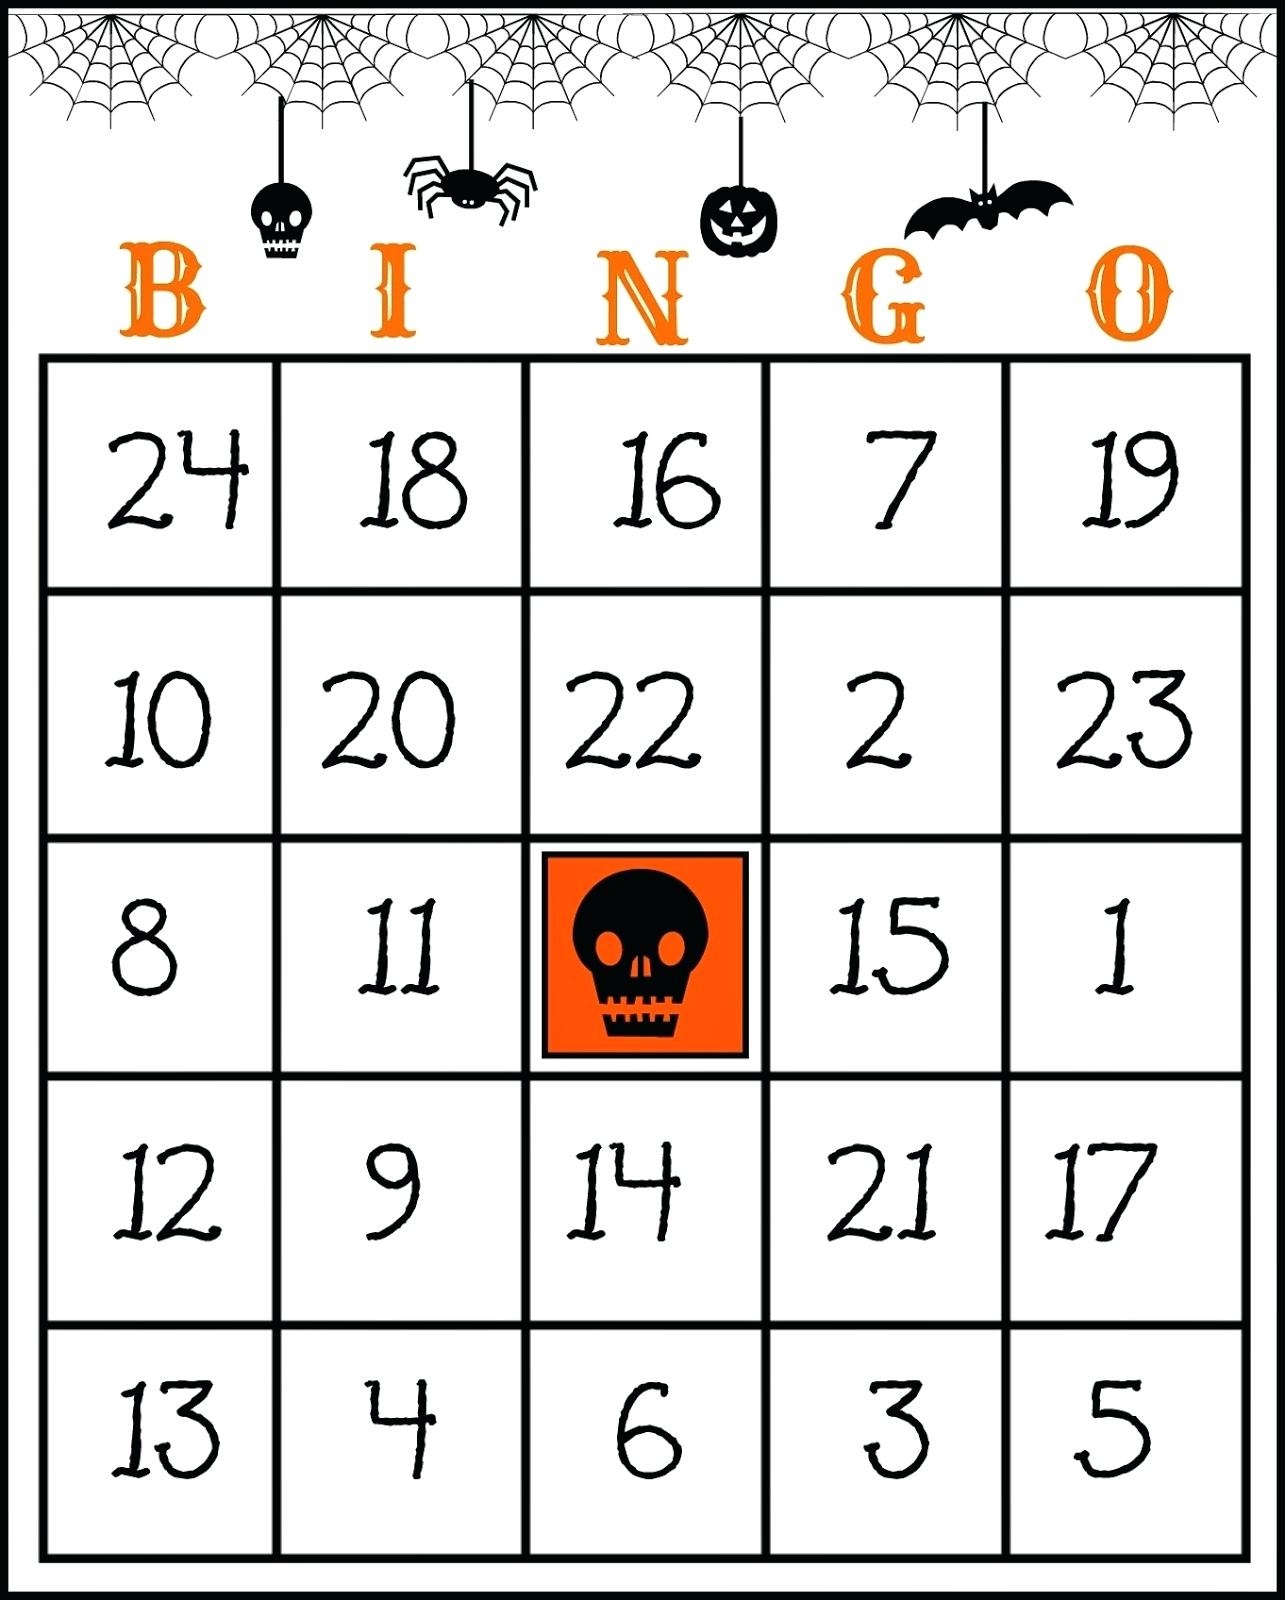 Maths Bingo Free Multiplication Games For Kids Printable Times - Math Bingo Free Printable